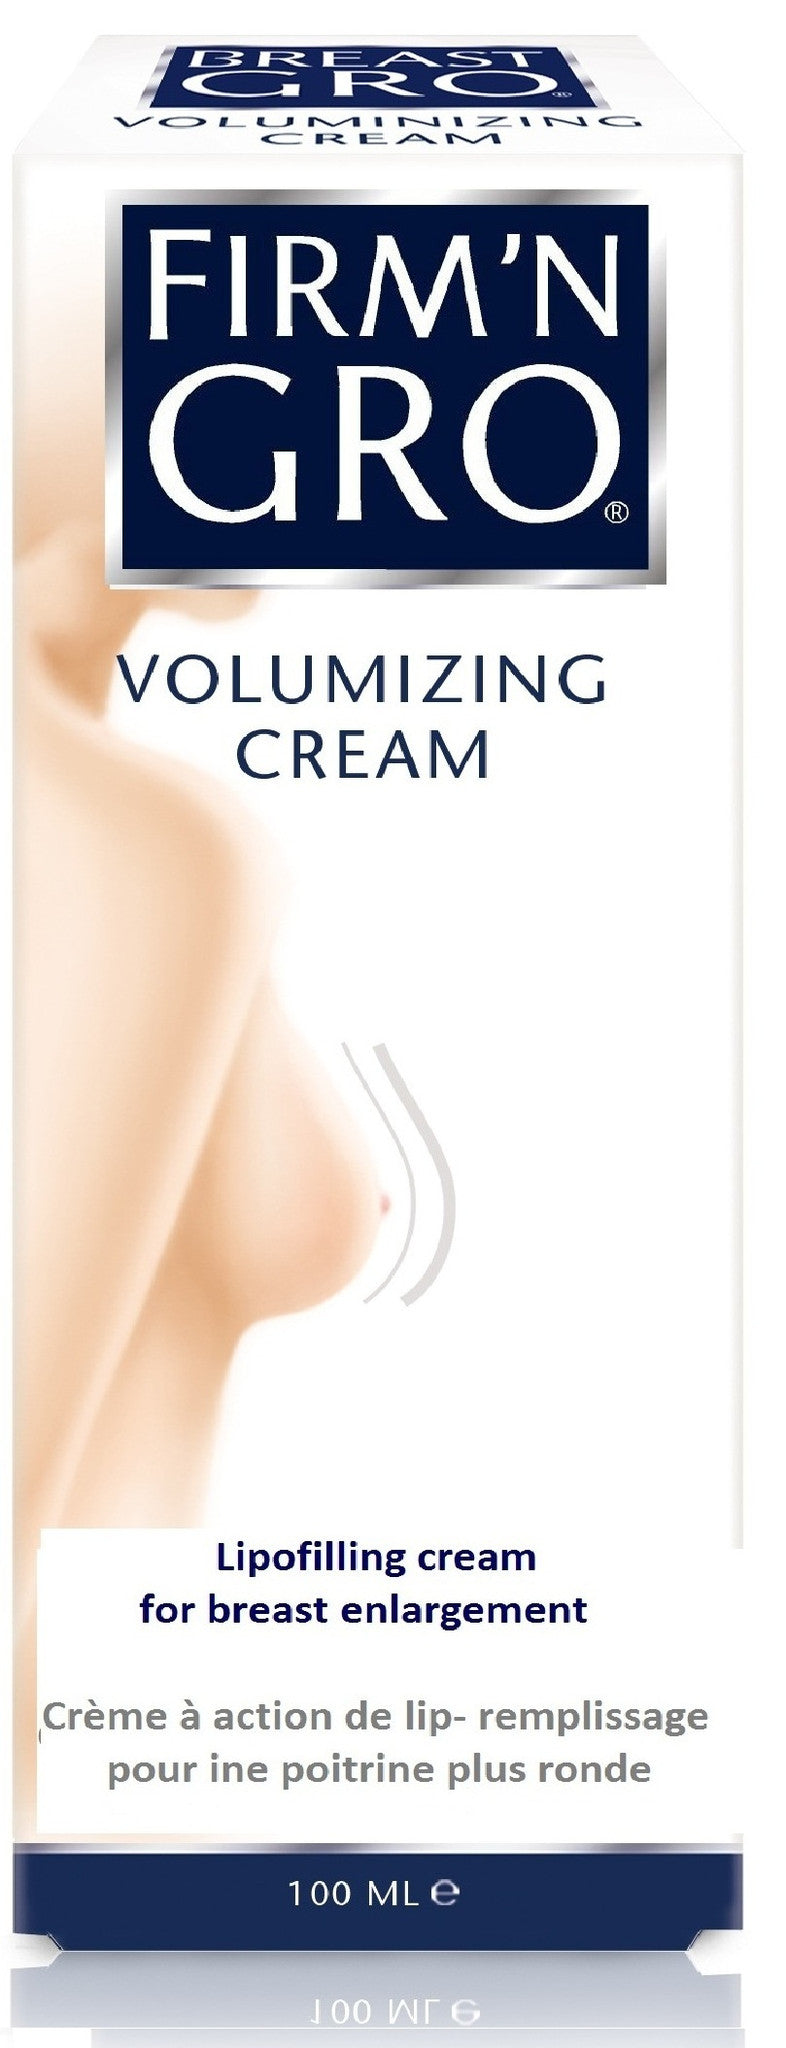 Firm'N Gro Volumizing Cream by Firm'N Gro - Ebambu.ca natural health product store - free shipping <59$ 